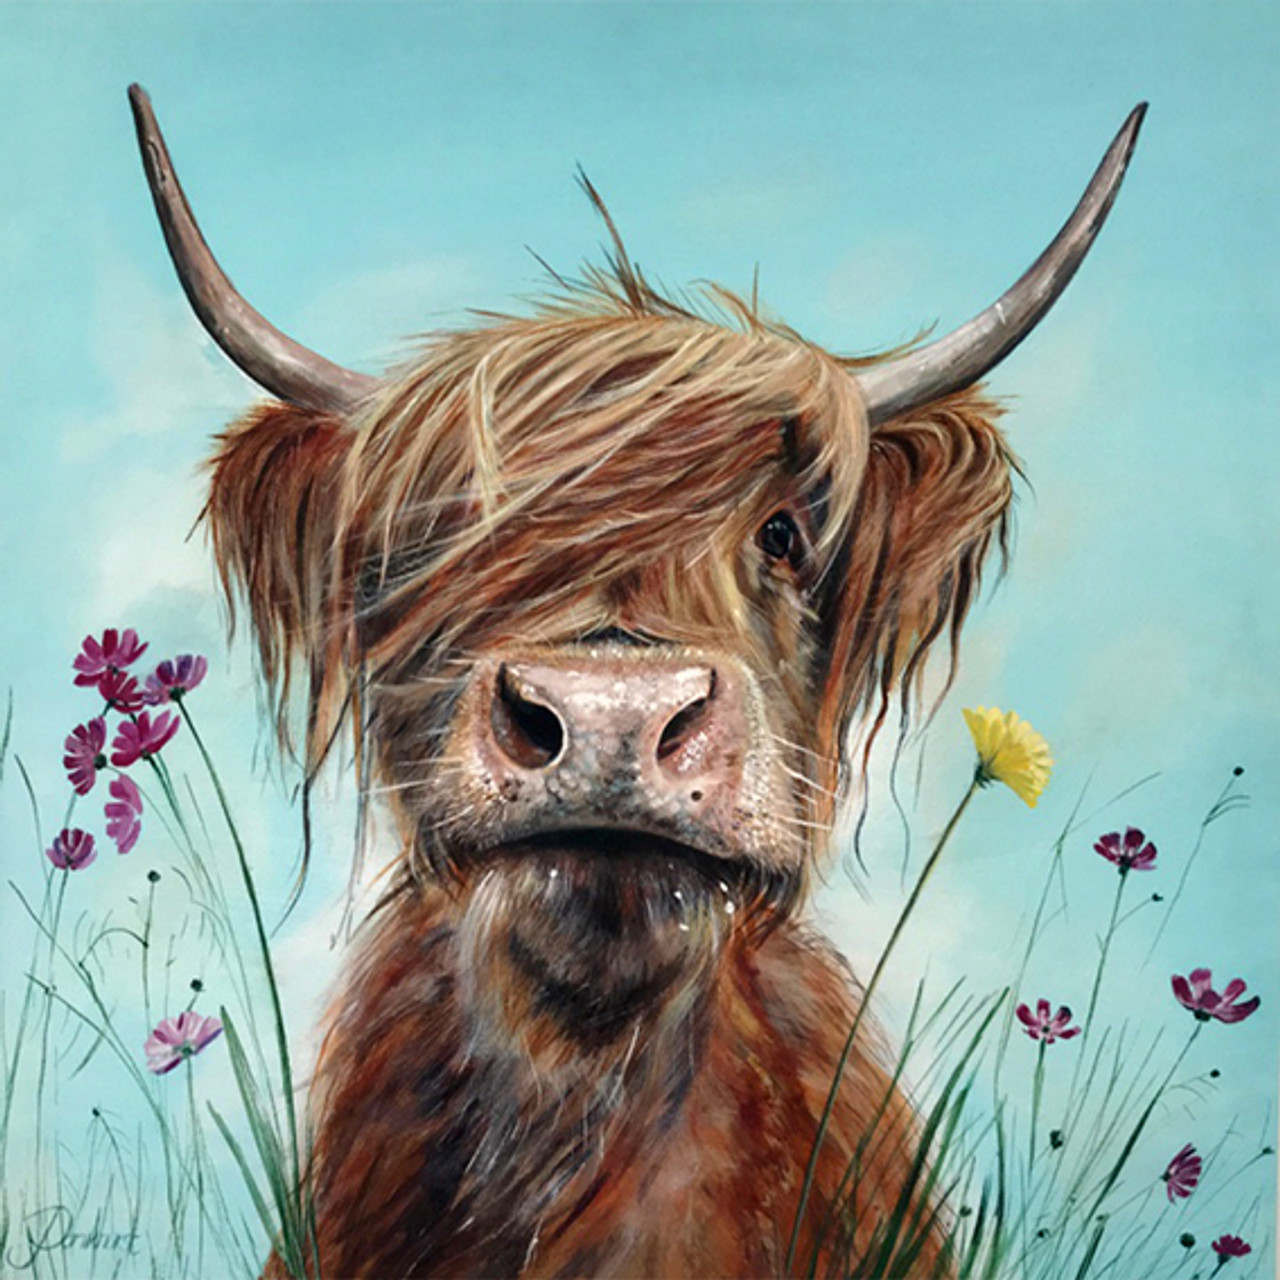 Diamond Art Painting Highland Cows